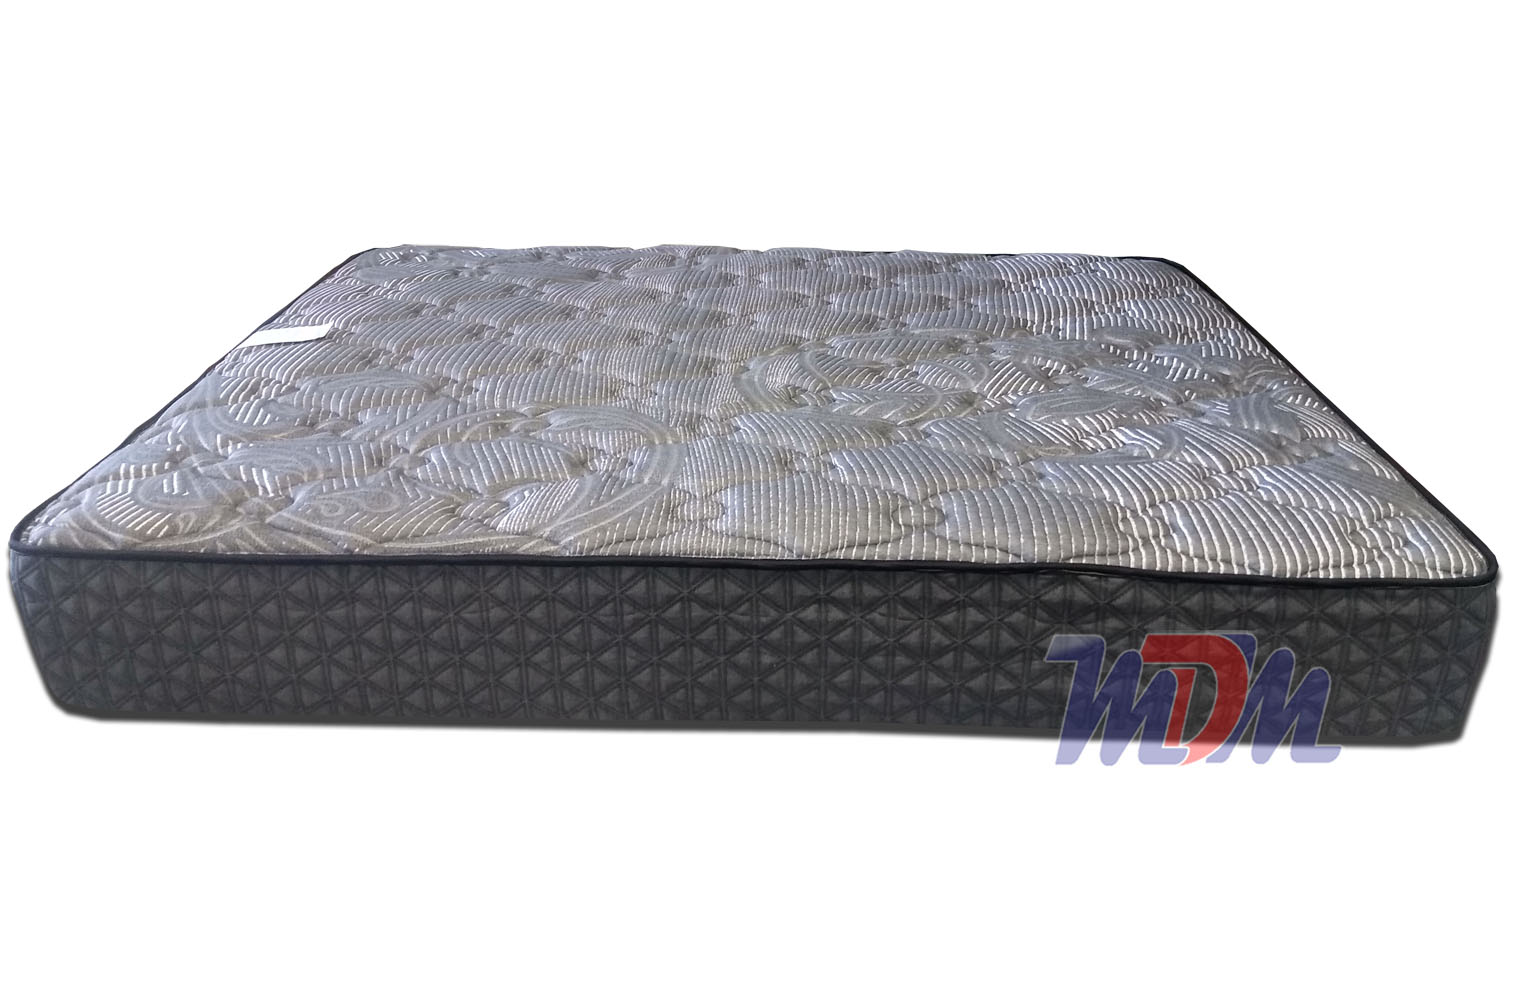 11 inch gel memory foam pocket spring hybrid bed made in the usa